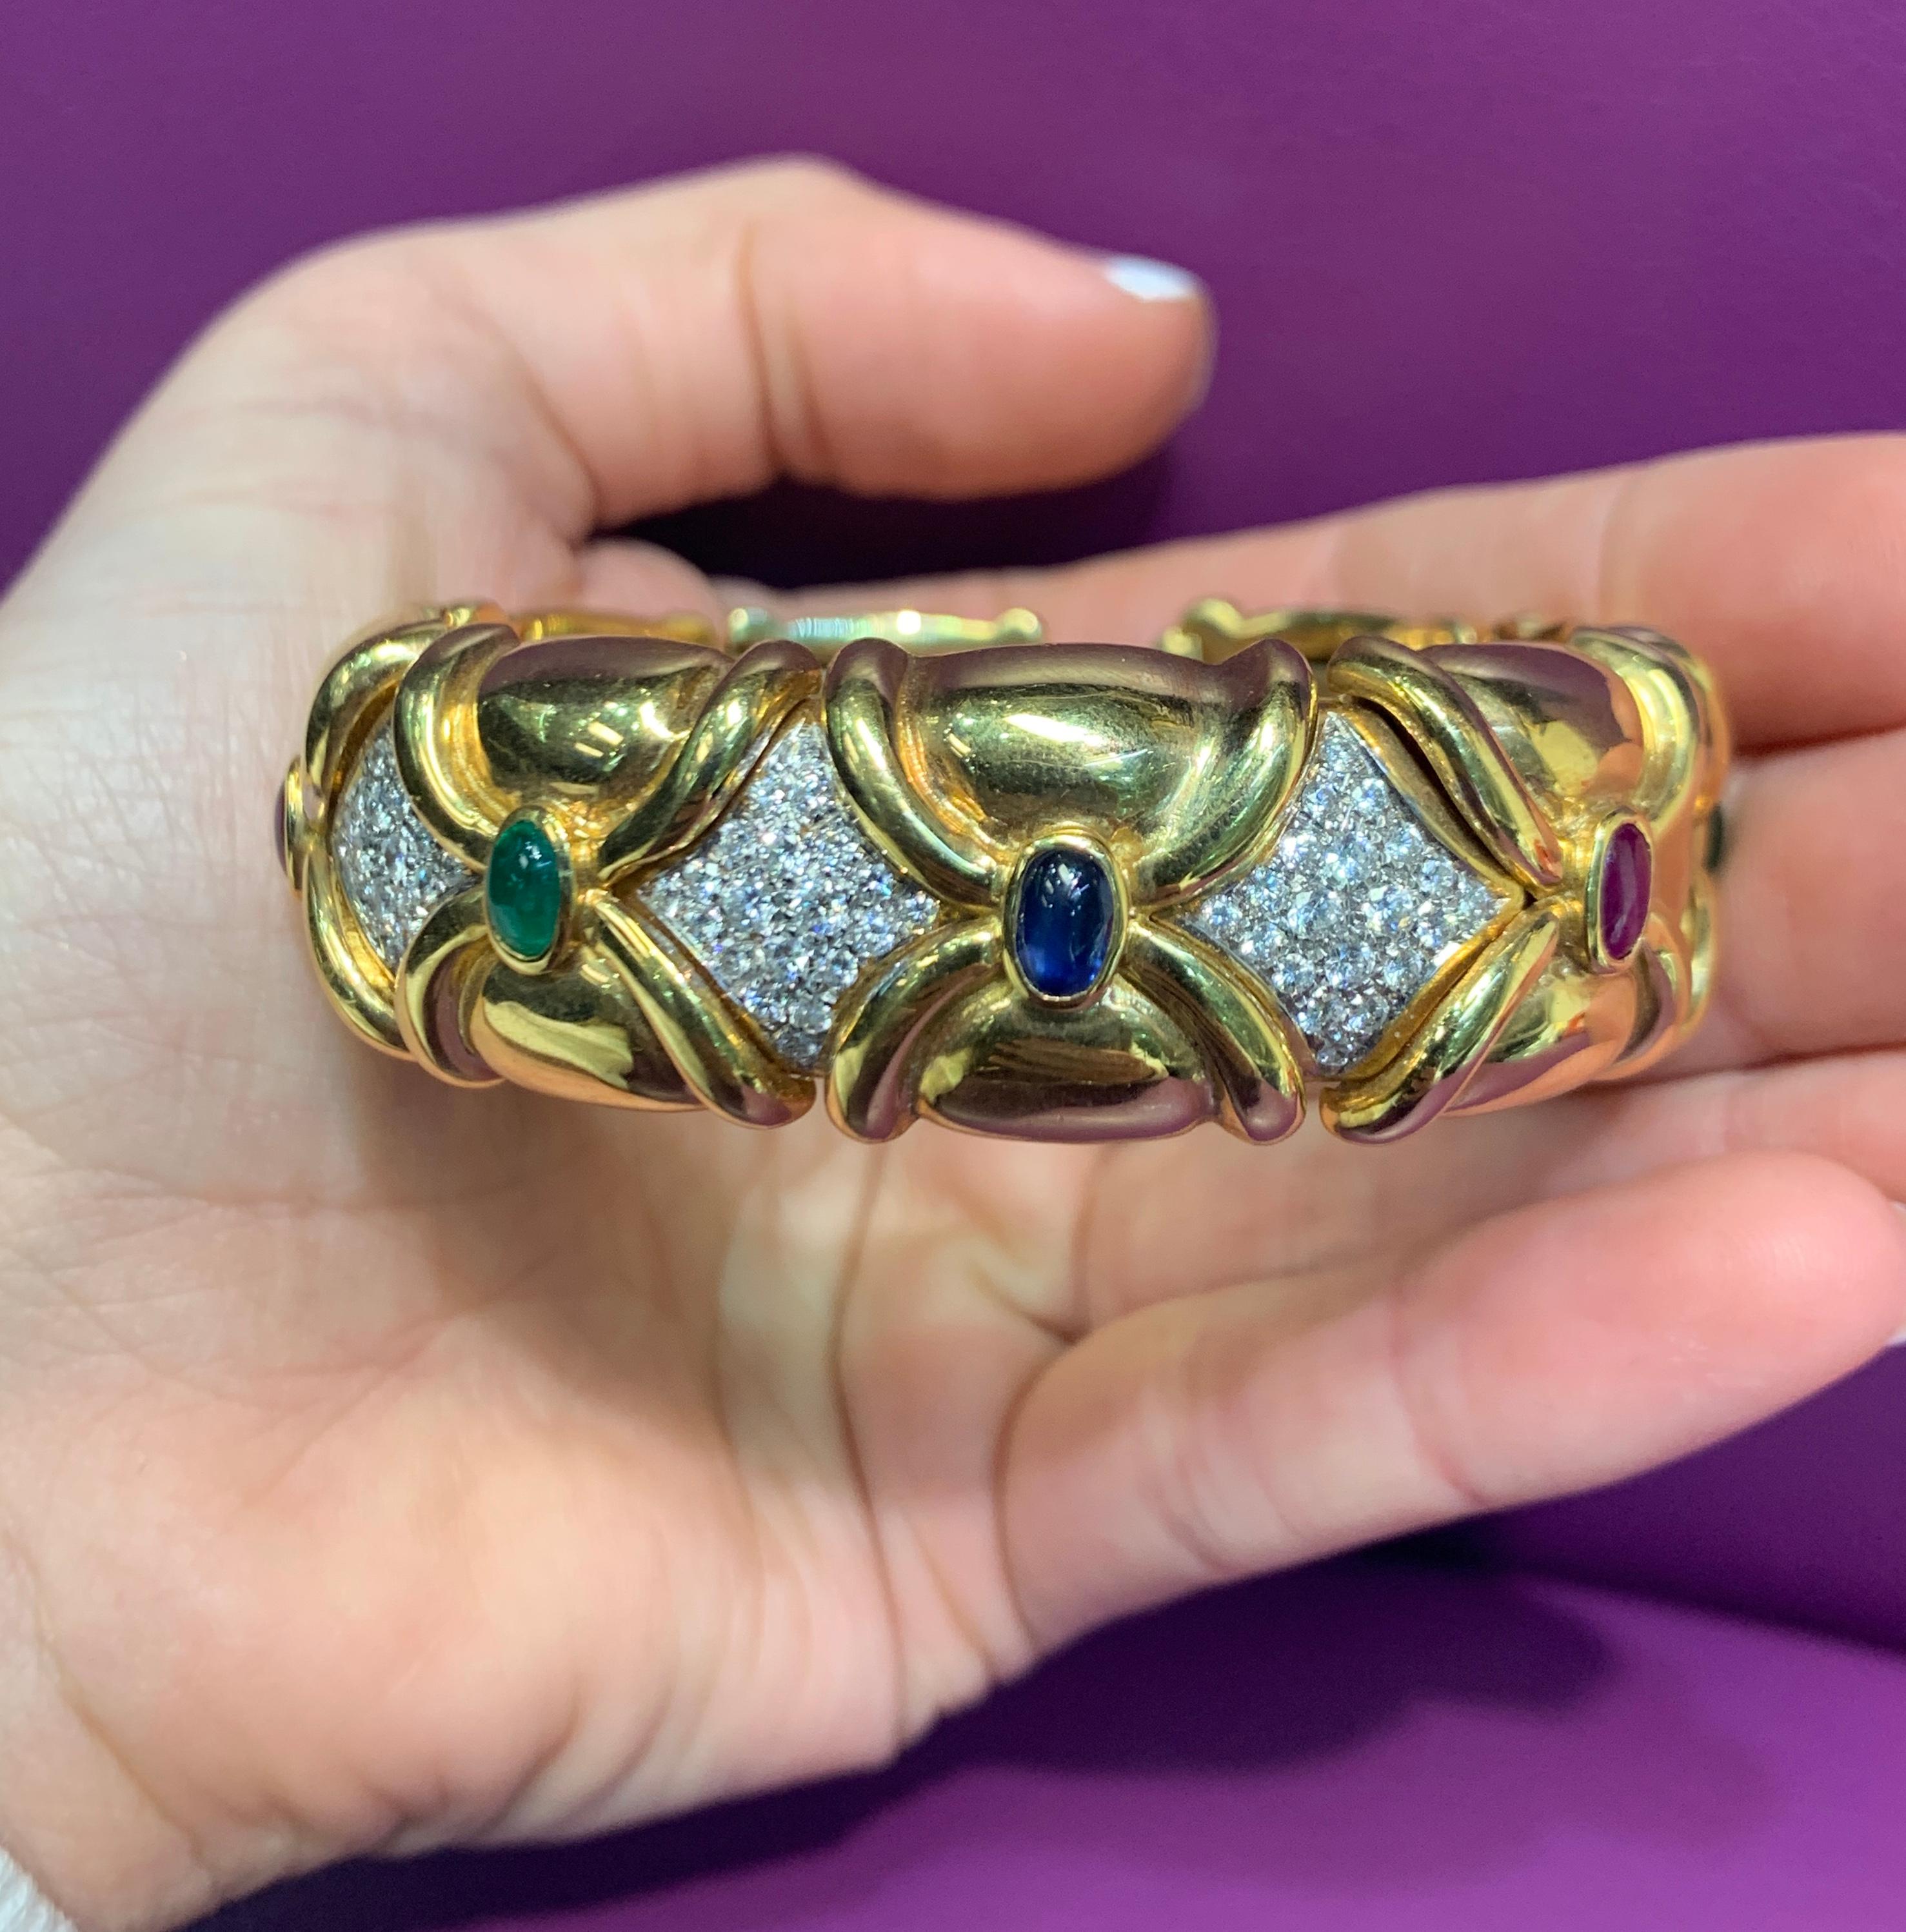 Multi Gem & Diamond Bangle Bracelet 
Cabochon stones consisting of  3 emeralds, 3 sapphires & 2 rubies 
60 pave diamonds weigh approximately 3 carats
Measurements: 2.0